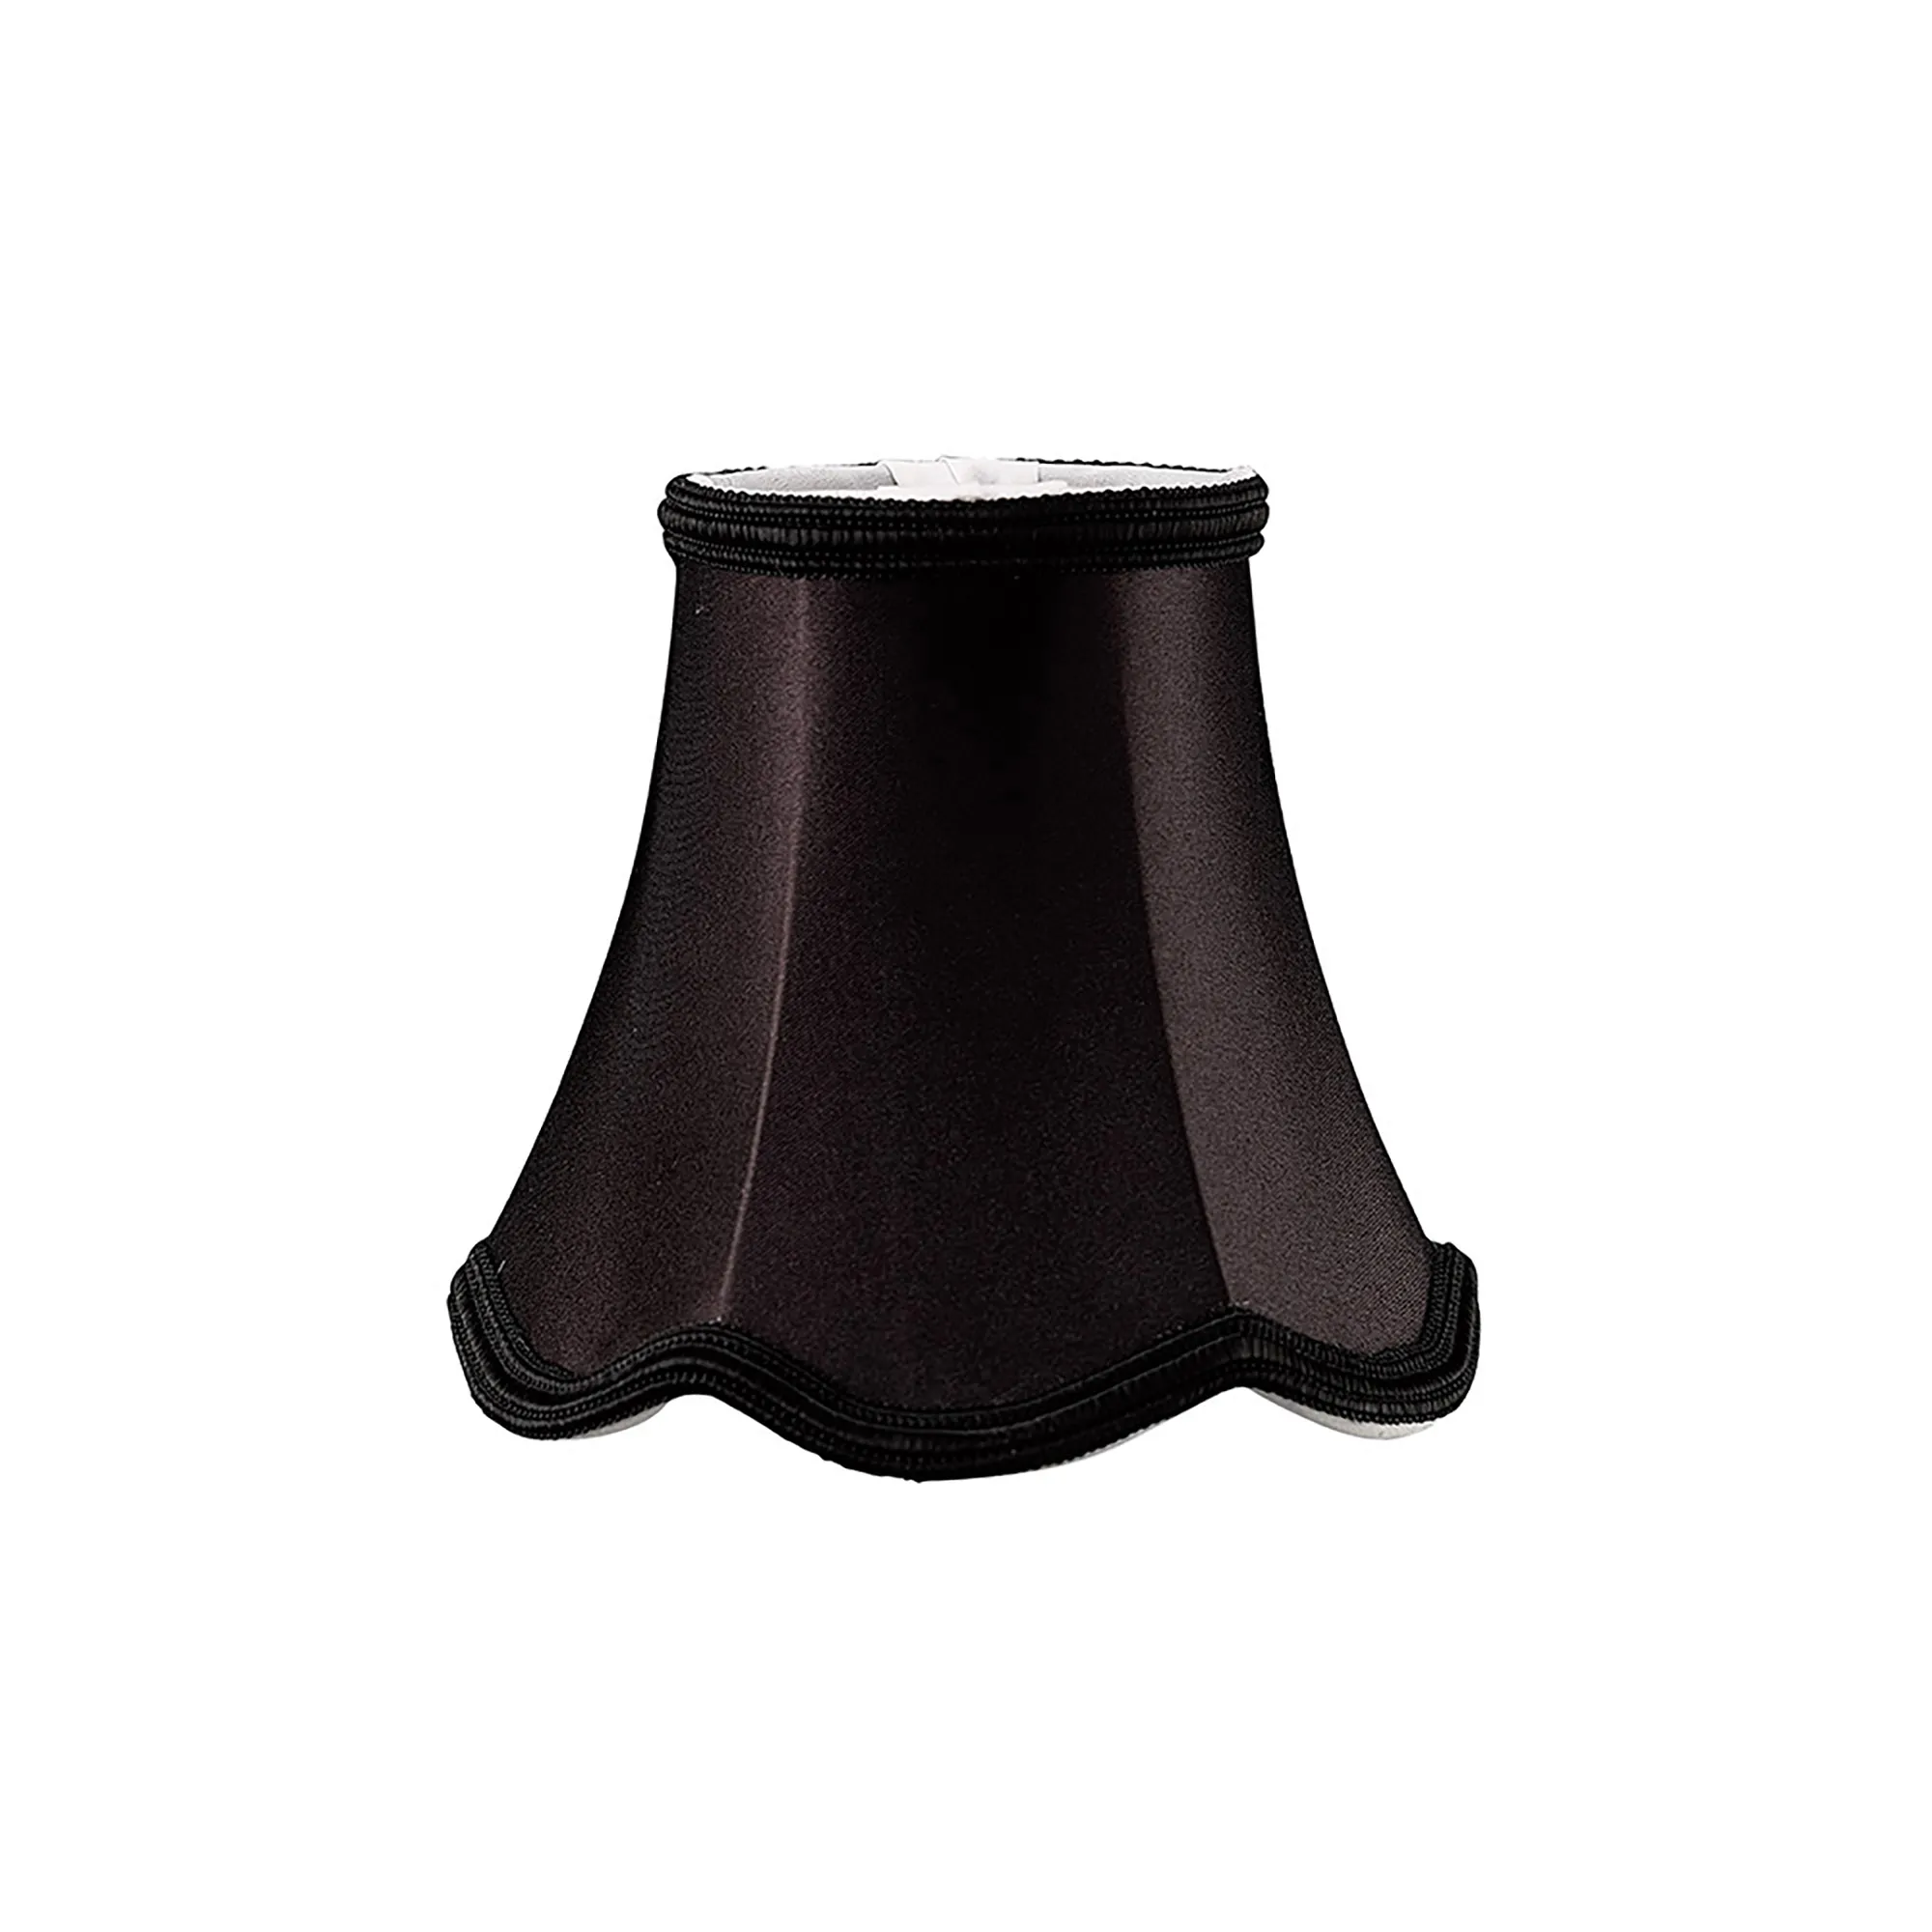 ILS10601  Onida 13cm Clip-On Fabric Shade Black